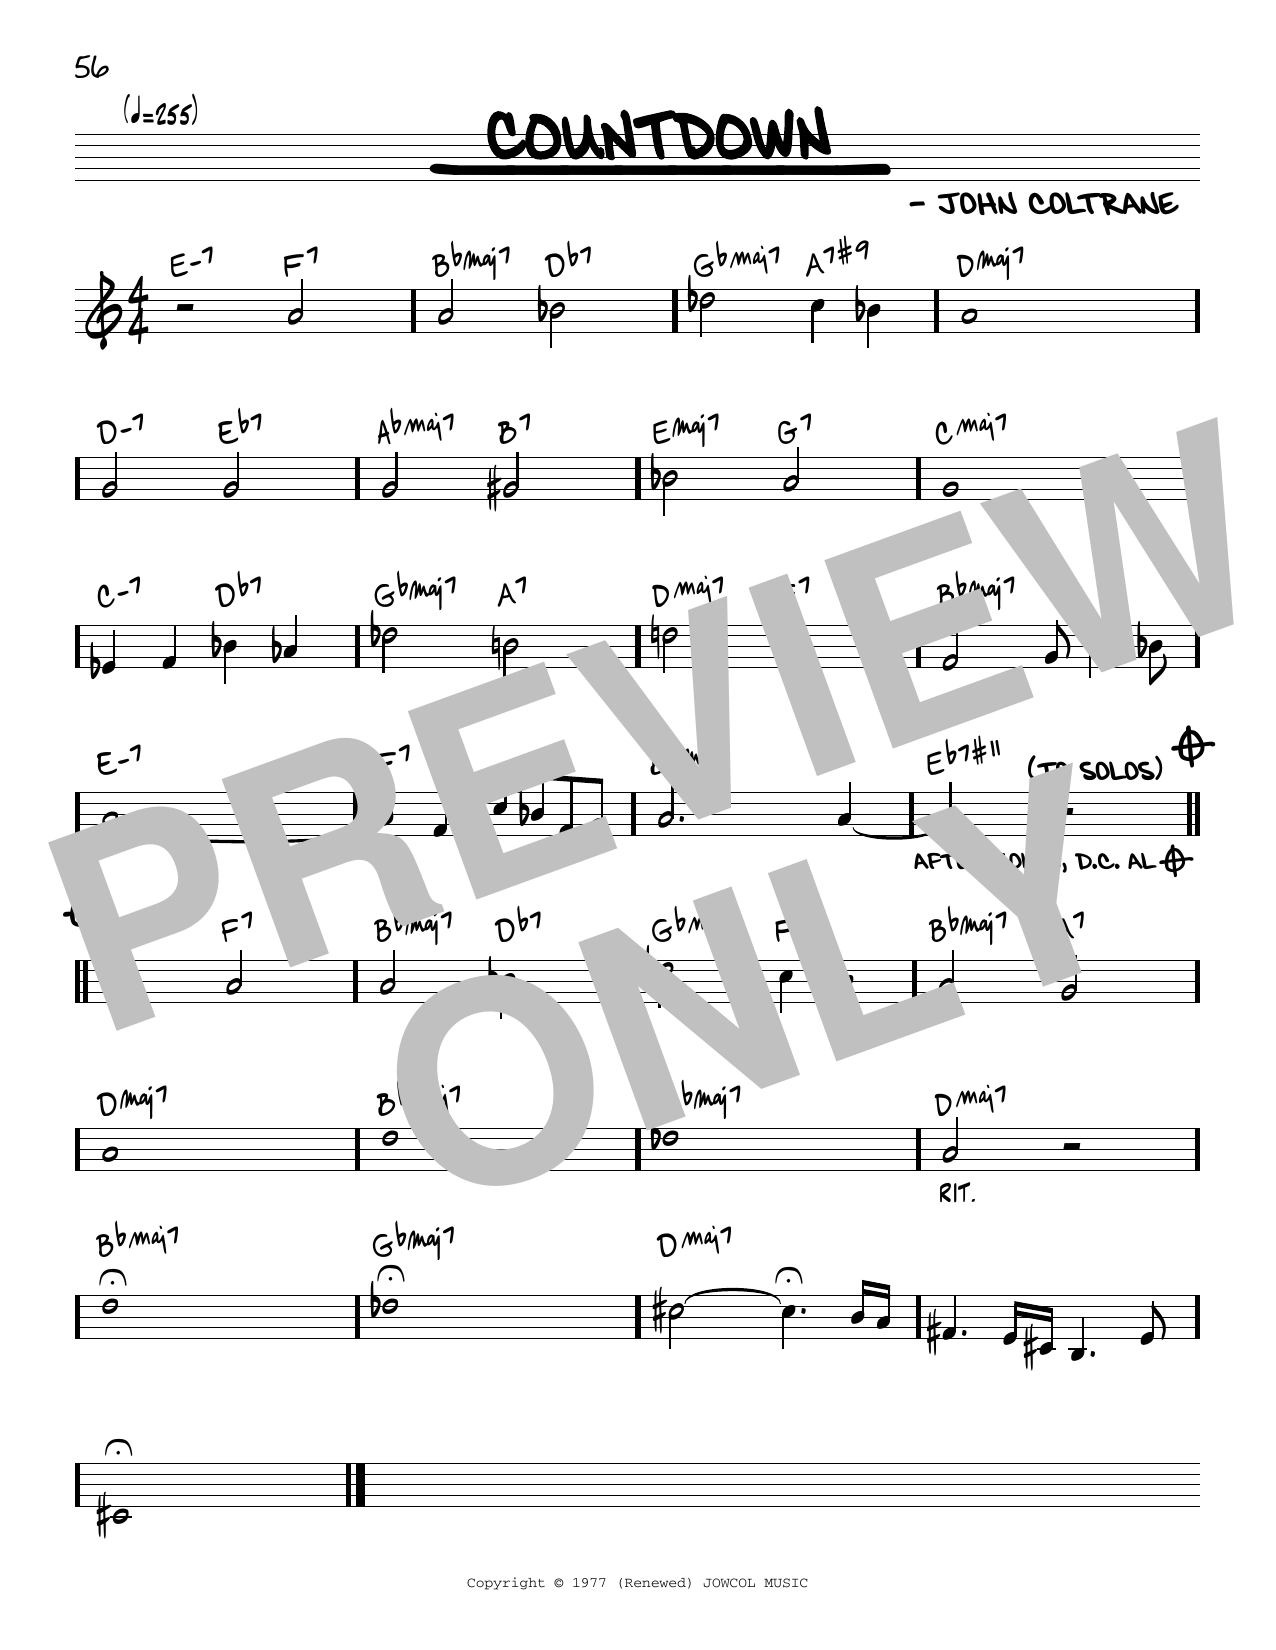 John Coltrane Countdown sheet music notes and chords arranged for Tenor Sax Transcription